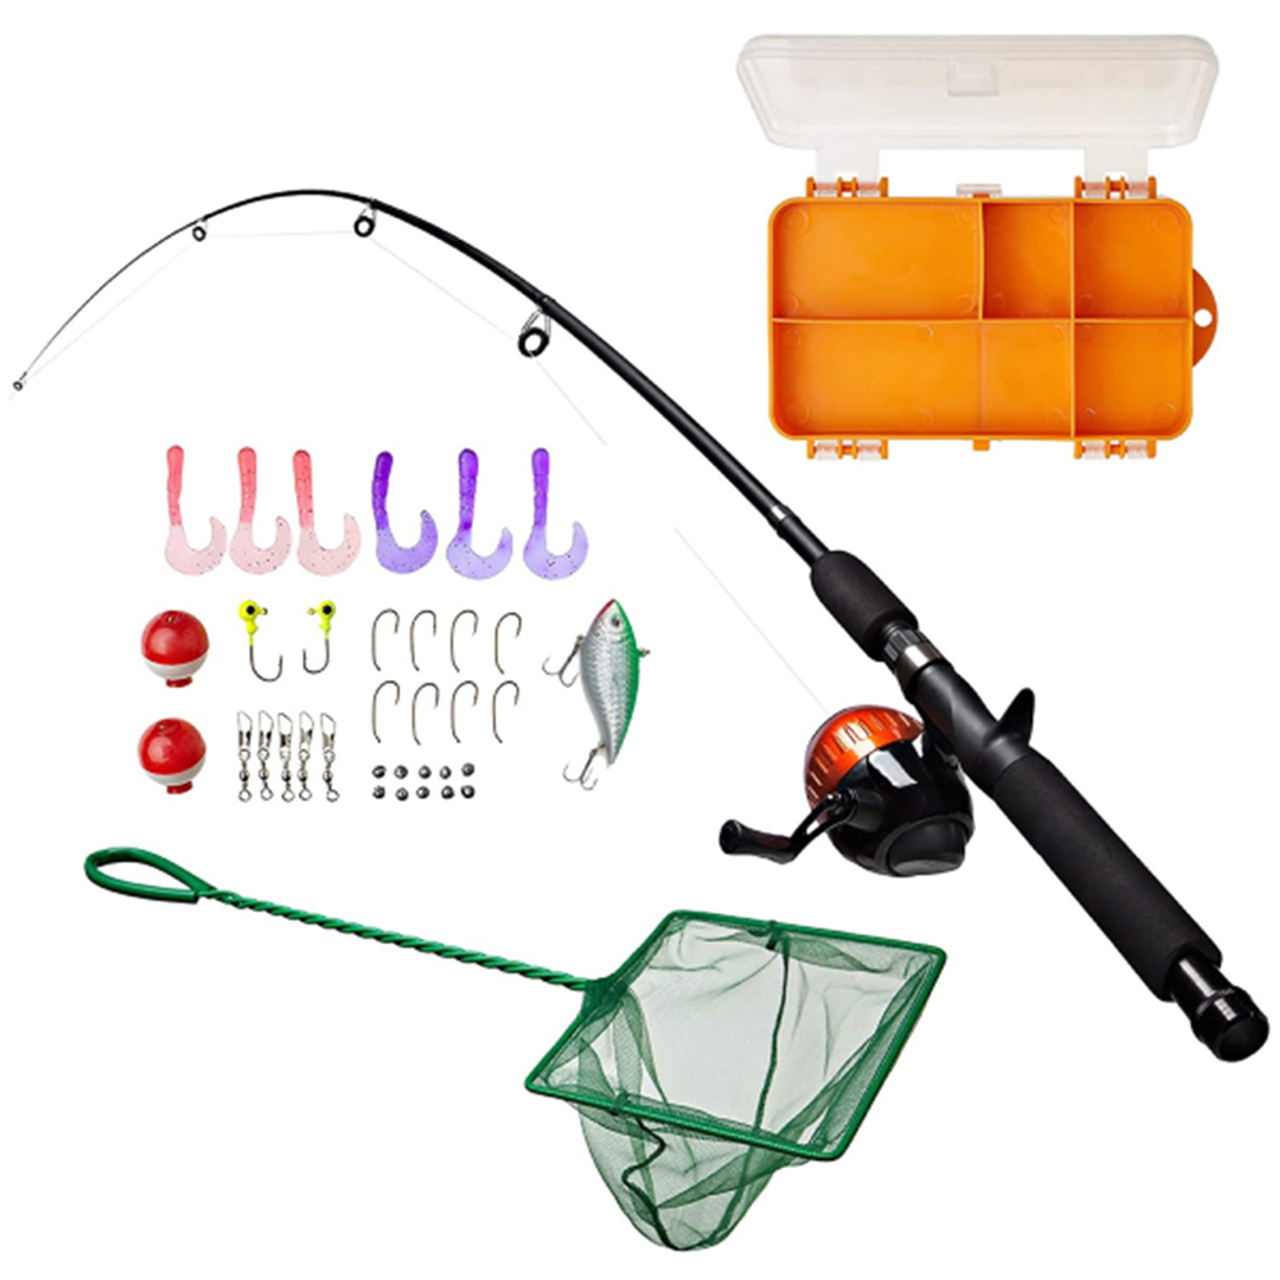 Kids' Fishing Kit with 17-Inch Fishing Rod